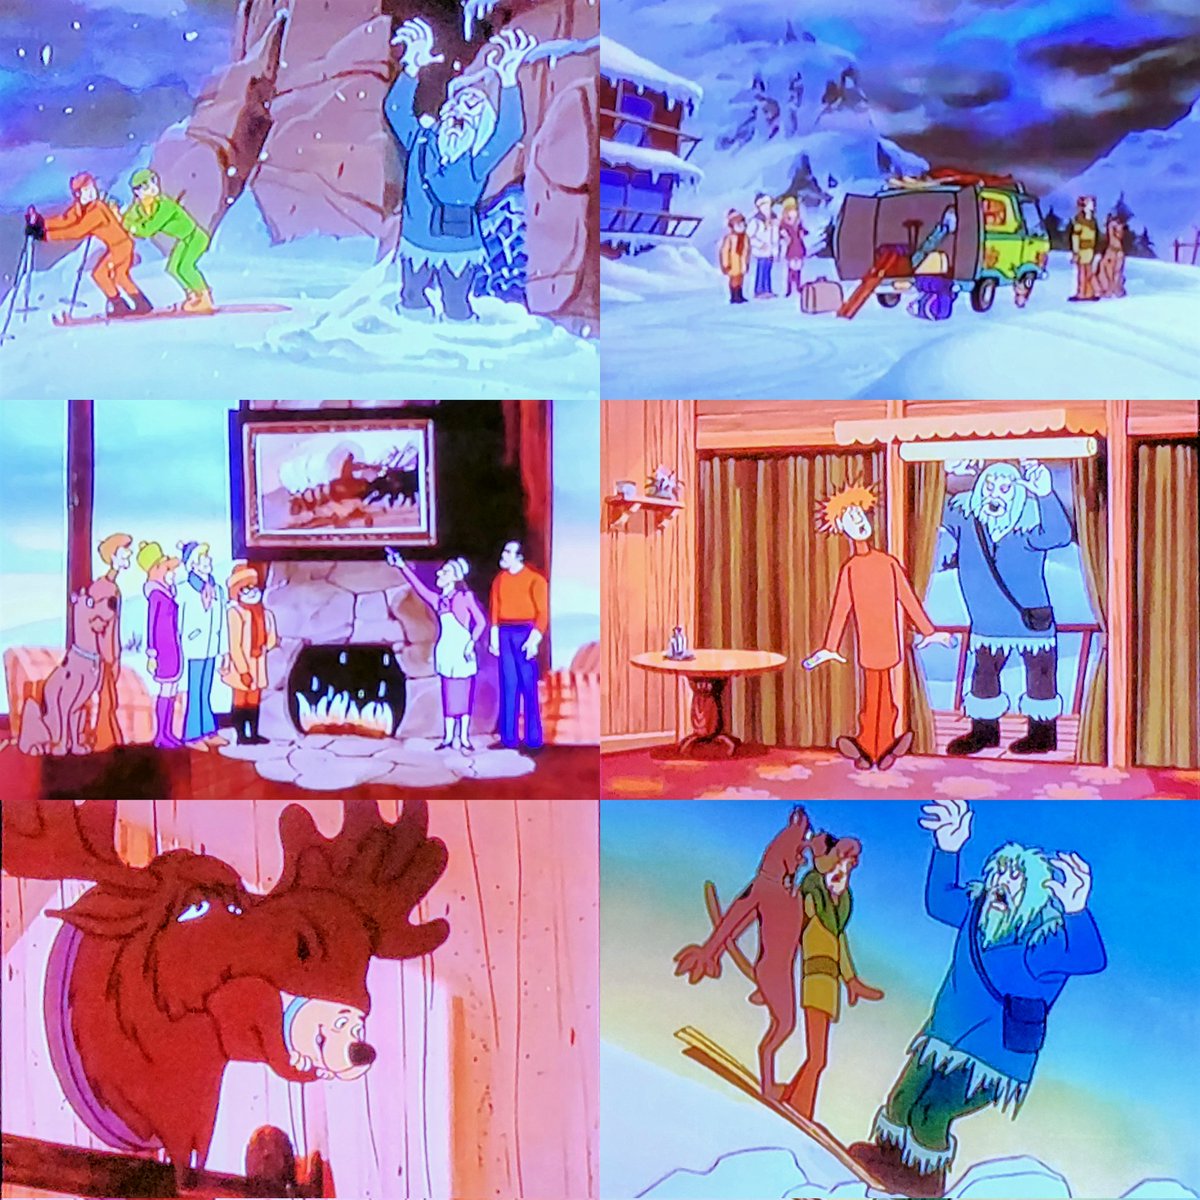 Happy Friday, Gang!😊

#NowWatching
Scooby-Doo & Scrappy-Doo🔎🐾
S01E13 Dec 15th, 1979🗓📺

'Rocky Mountain Yiiiii!' 🏔⛷️❄️

#ScoobyDoo #ScrappyDoo #ShaggyRogers #VelmaDinkley #DaphneBlake #FredJones #HannaBarbera #SaturdayMorningCartoons #Animation #TVSeries #Retro #Nostalgia